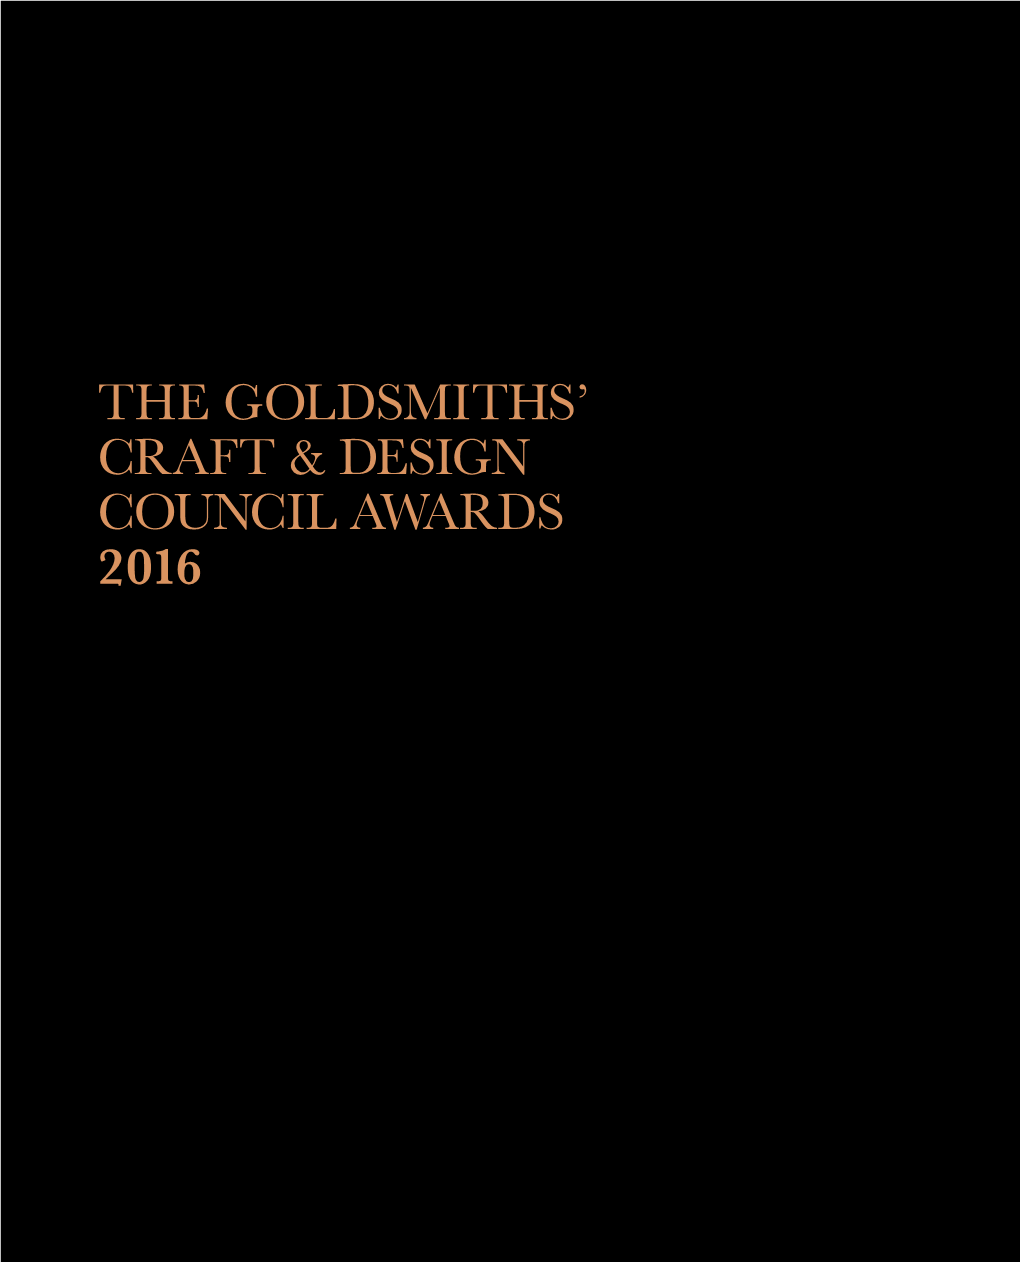 The Goldsmiths' Craft & Design Council Awards 2016